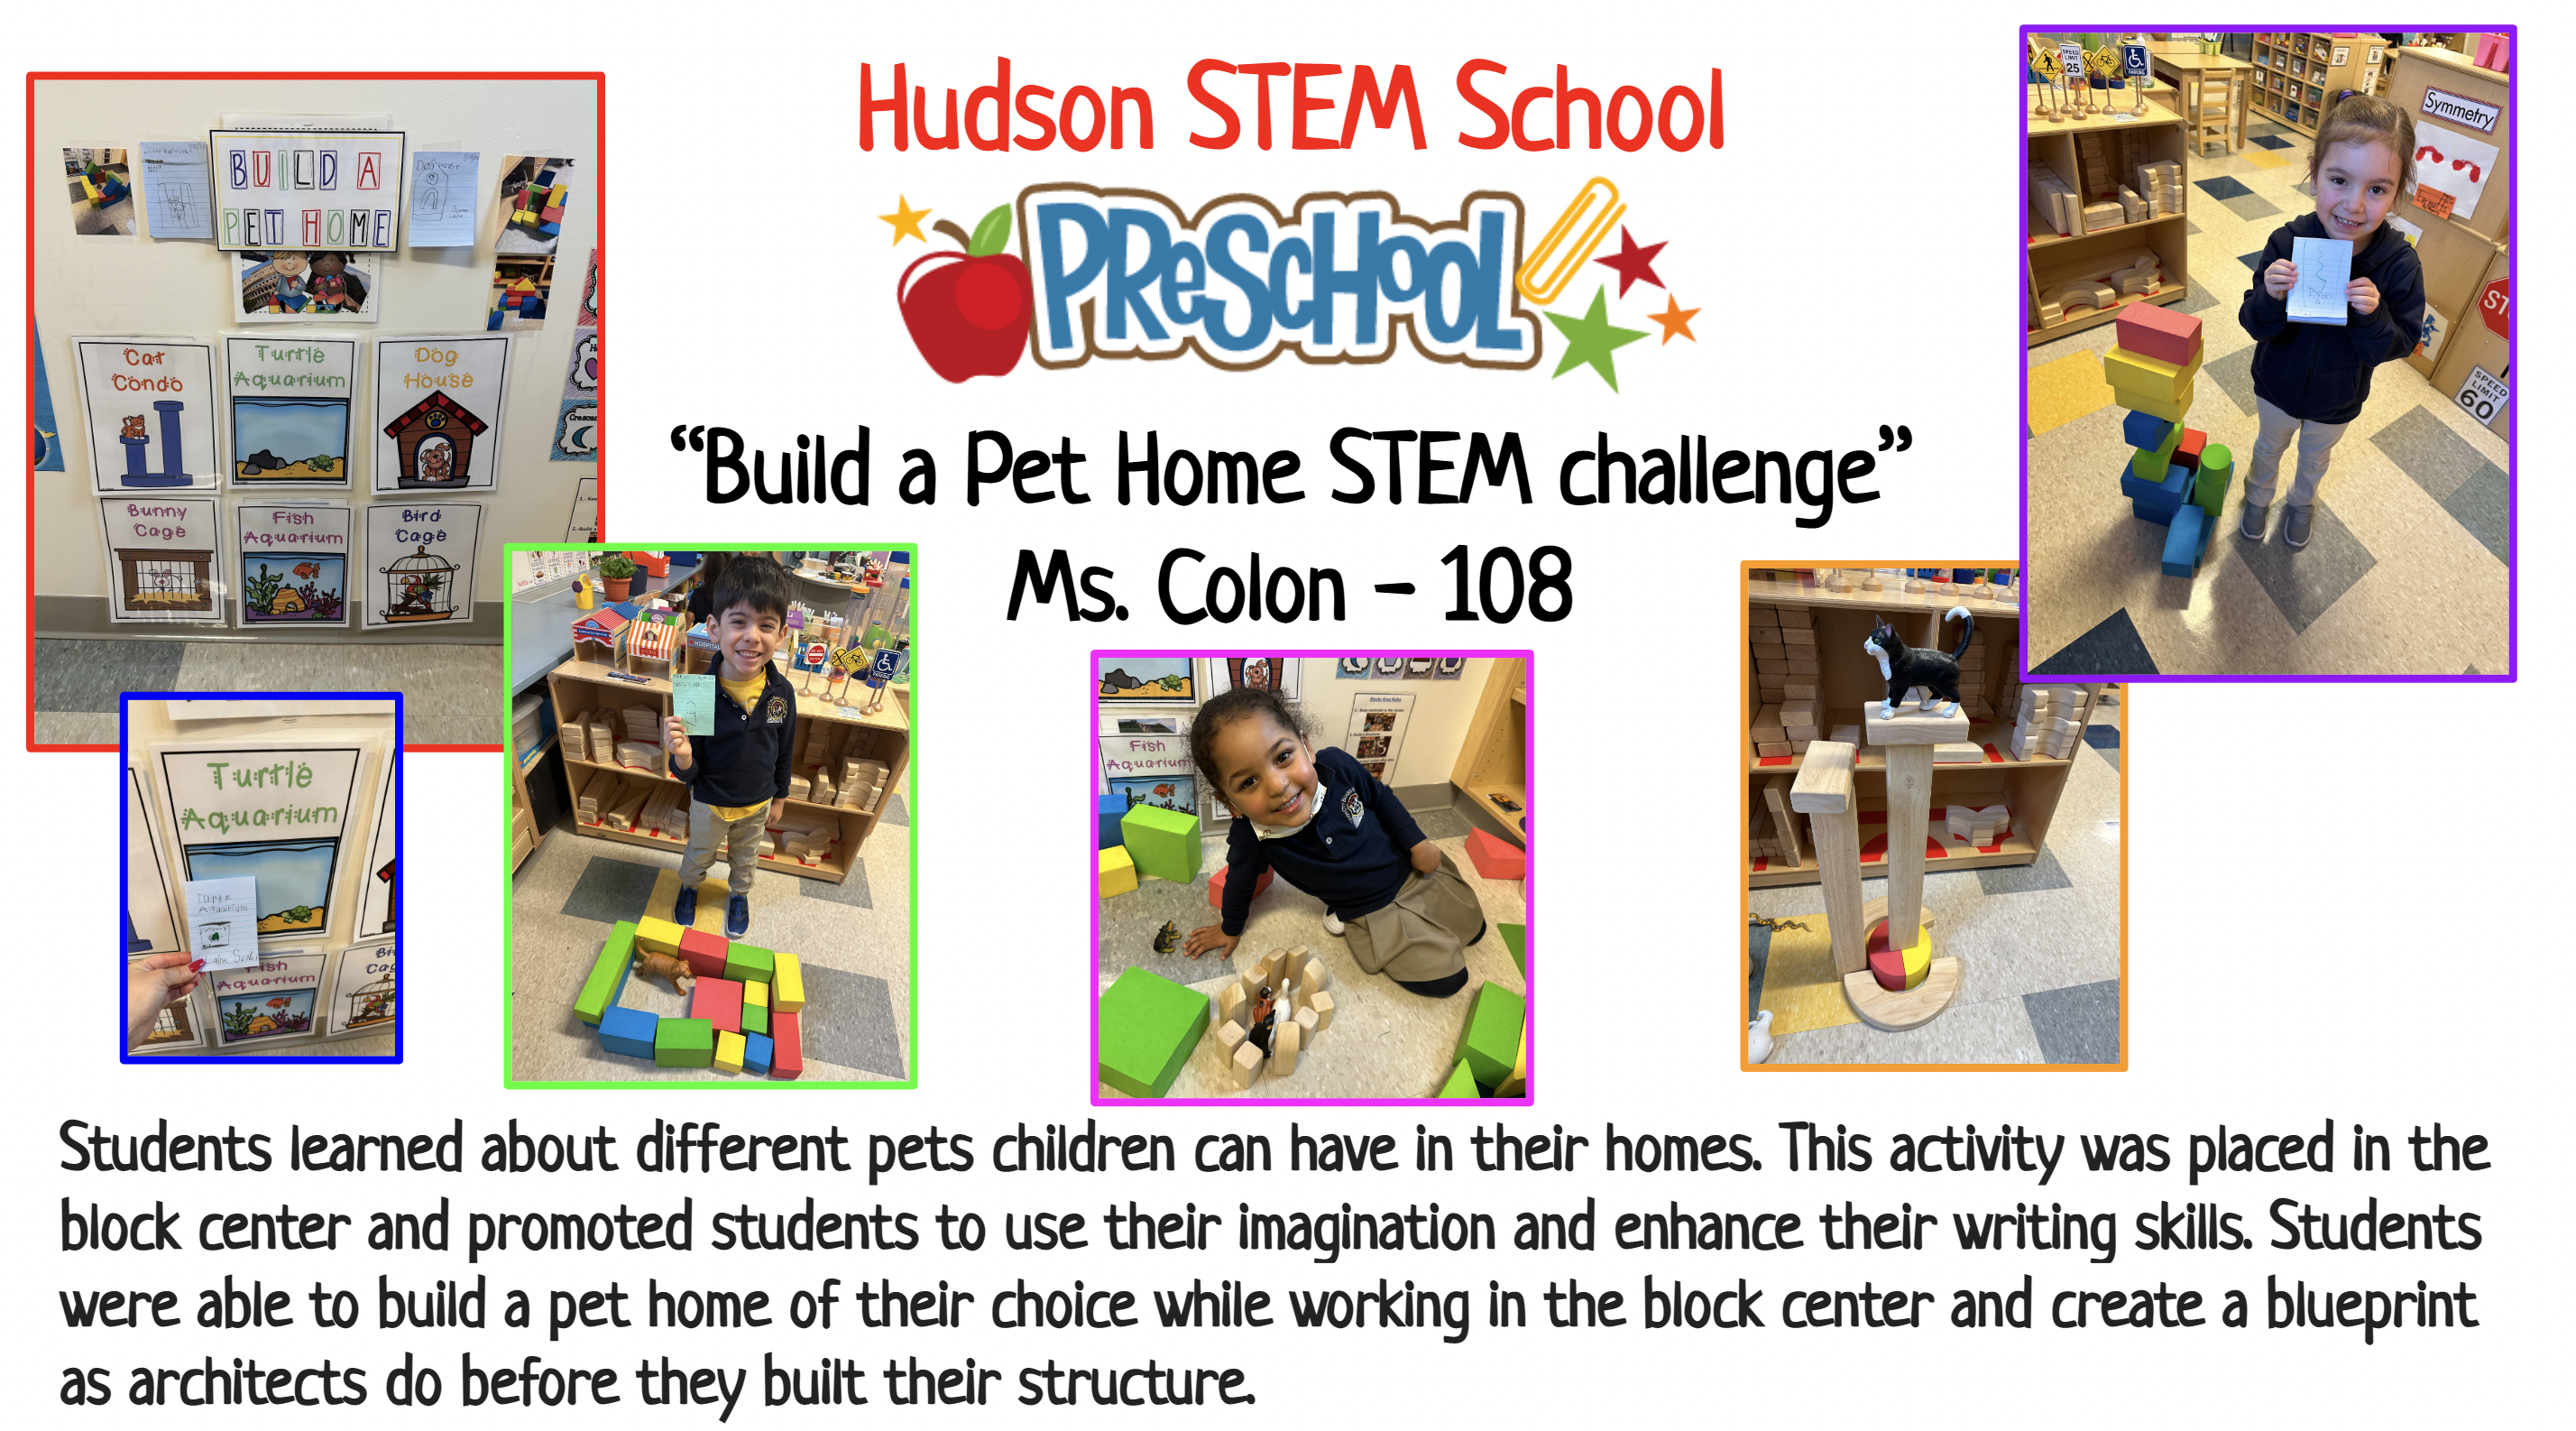 Build a Pet Home STEM Challenge at the Hudson School